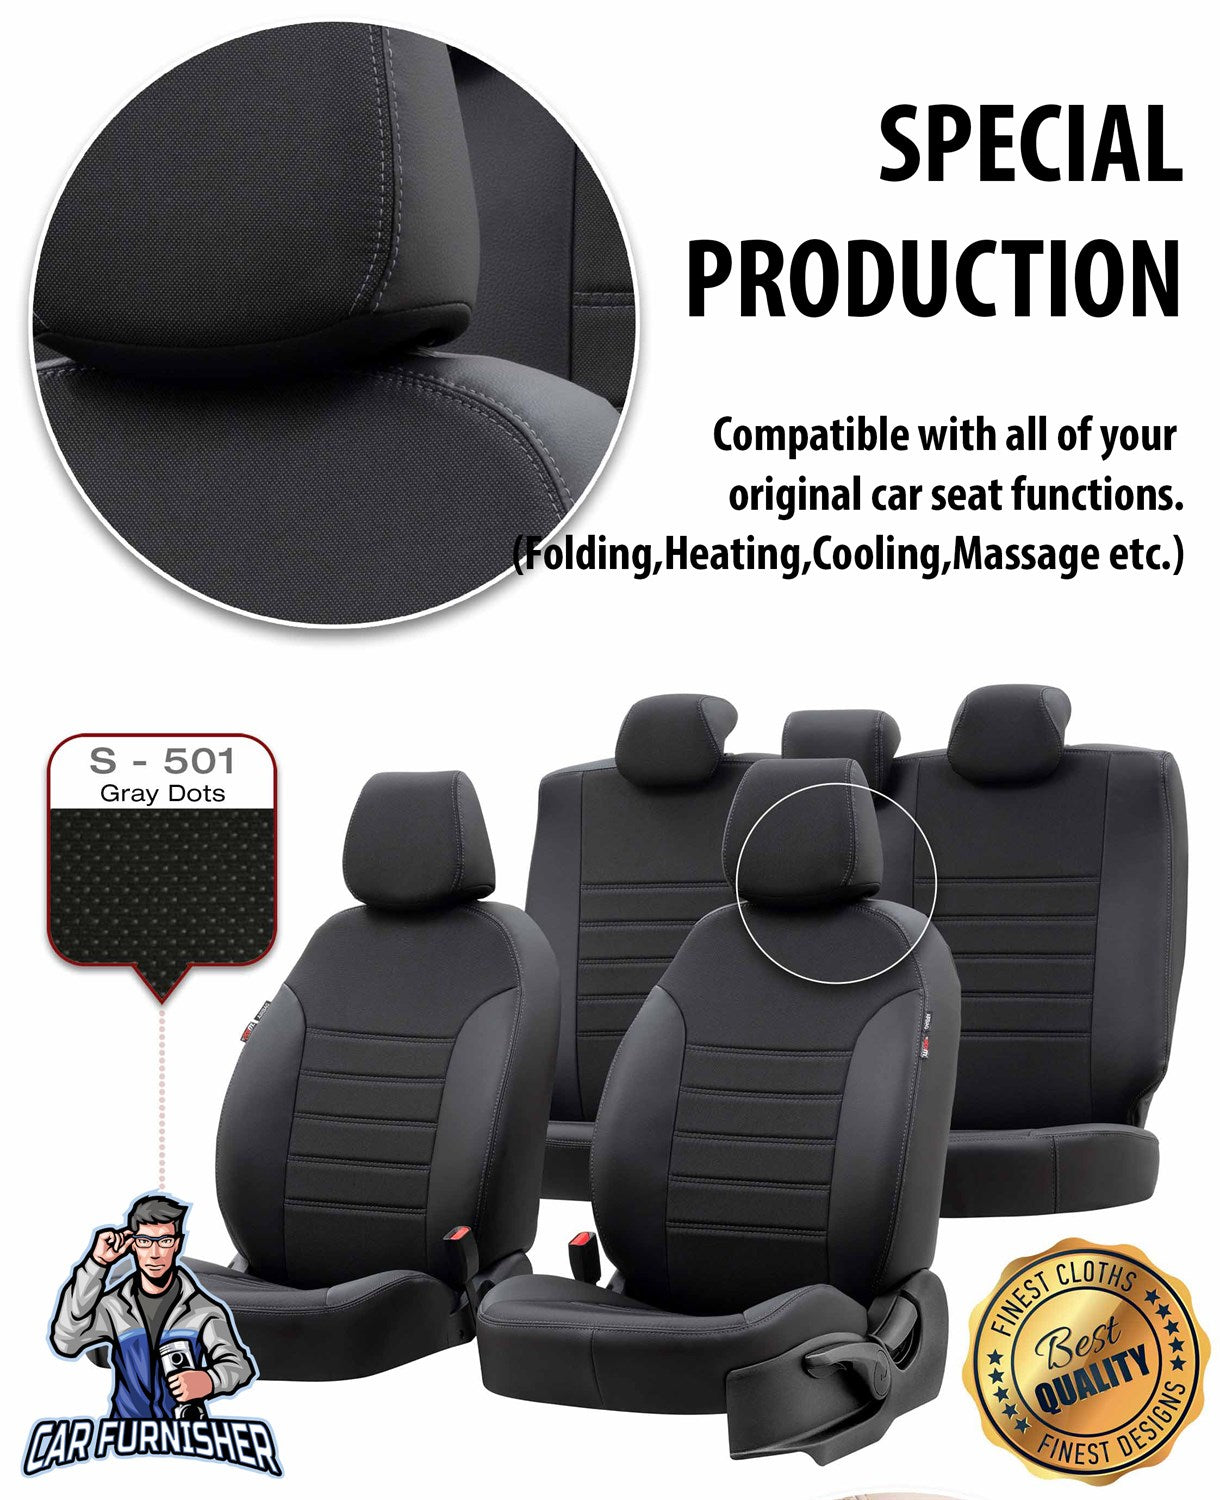 Volkswagen Beetle Seat Cover Paris Leather & Jacquard Design Black Leather & Jacquard Fabric